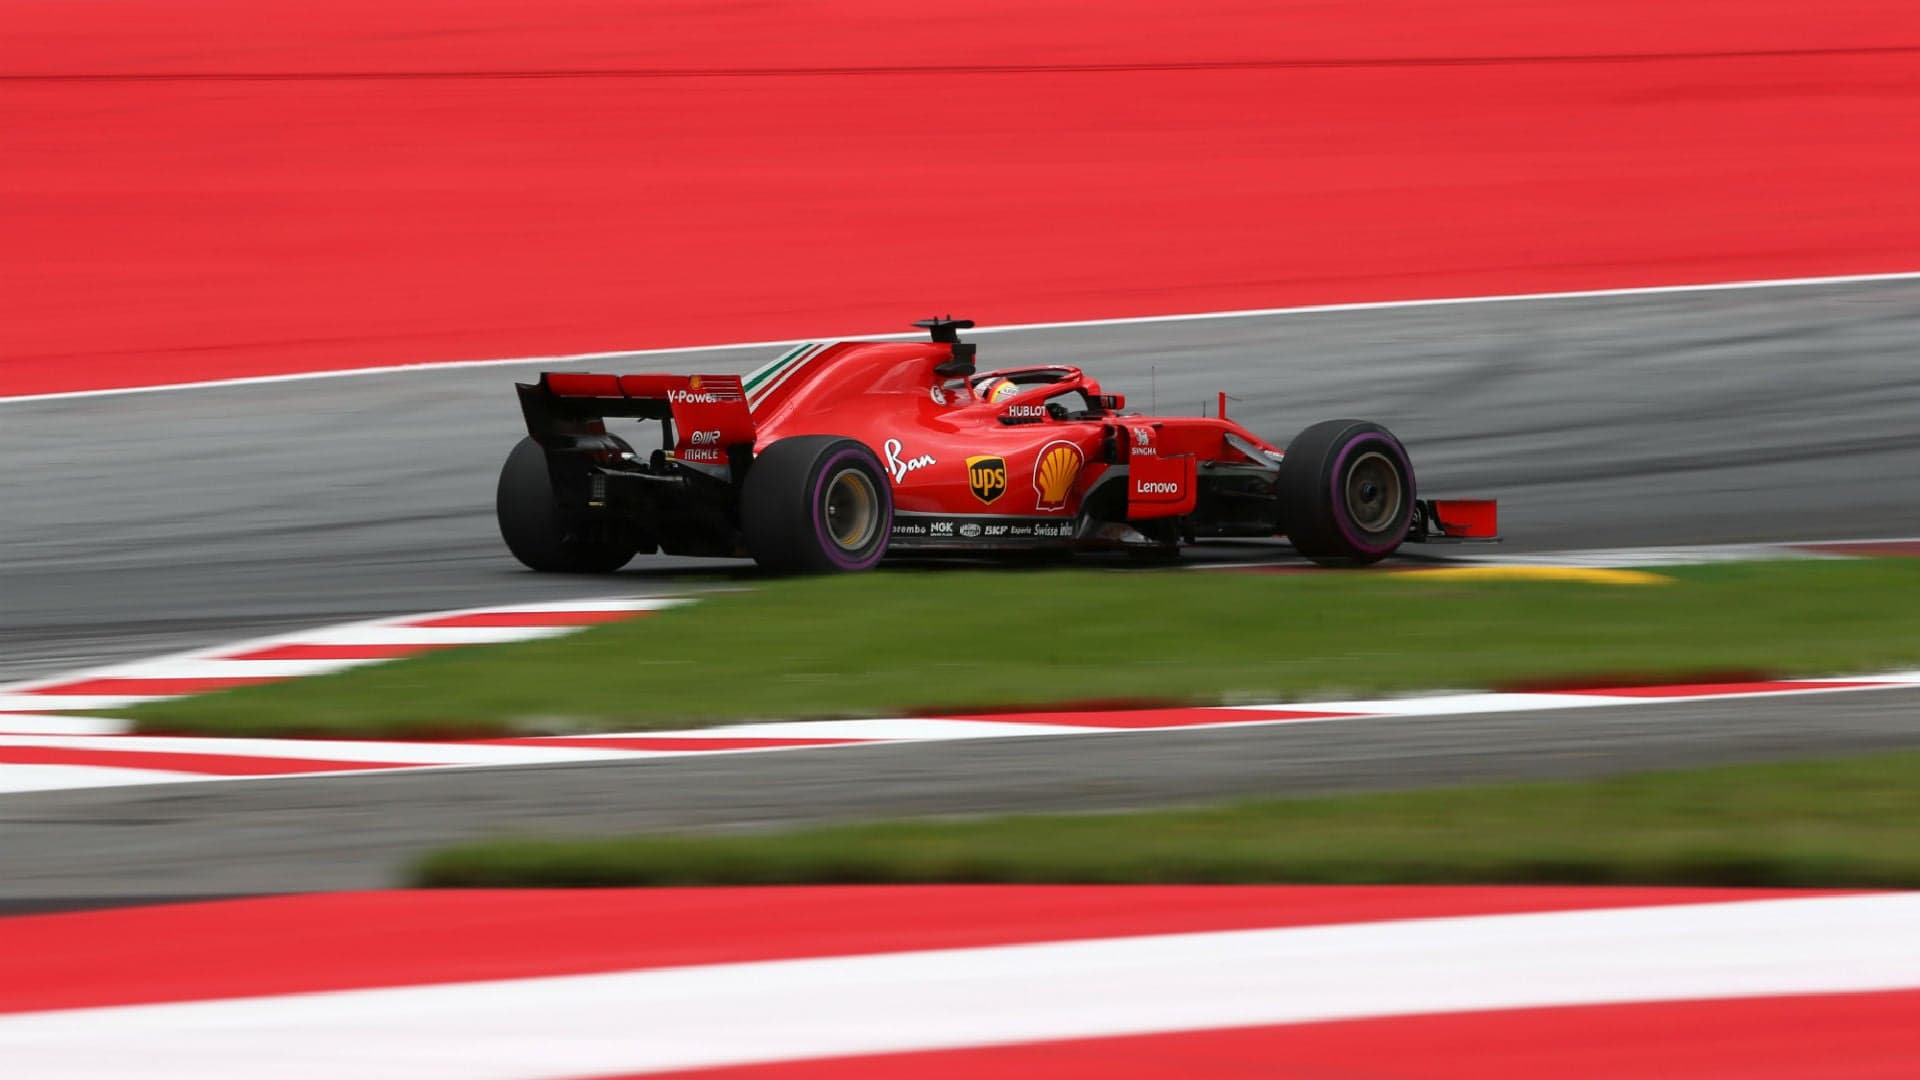 Vettel Penalized For Impeding Sainz in Austrian Grand Prix Qualifying